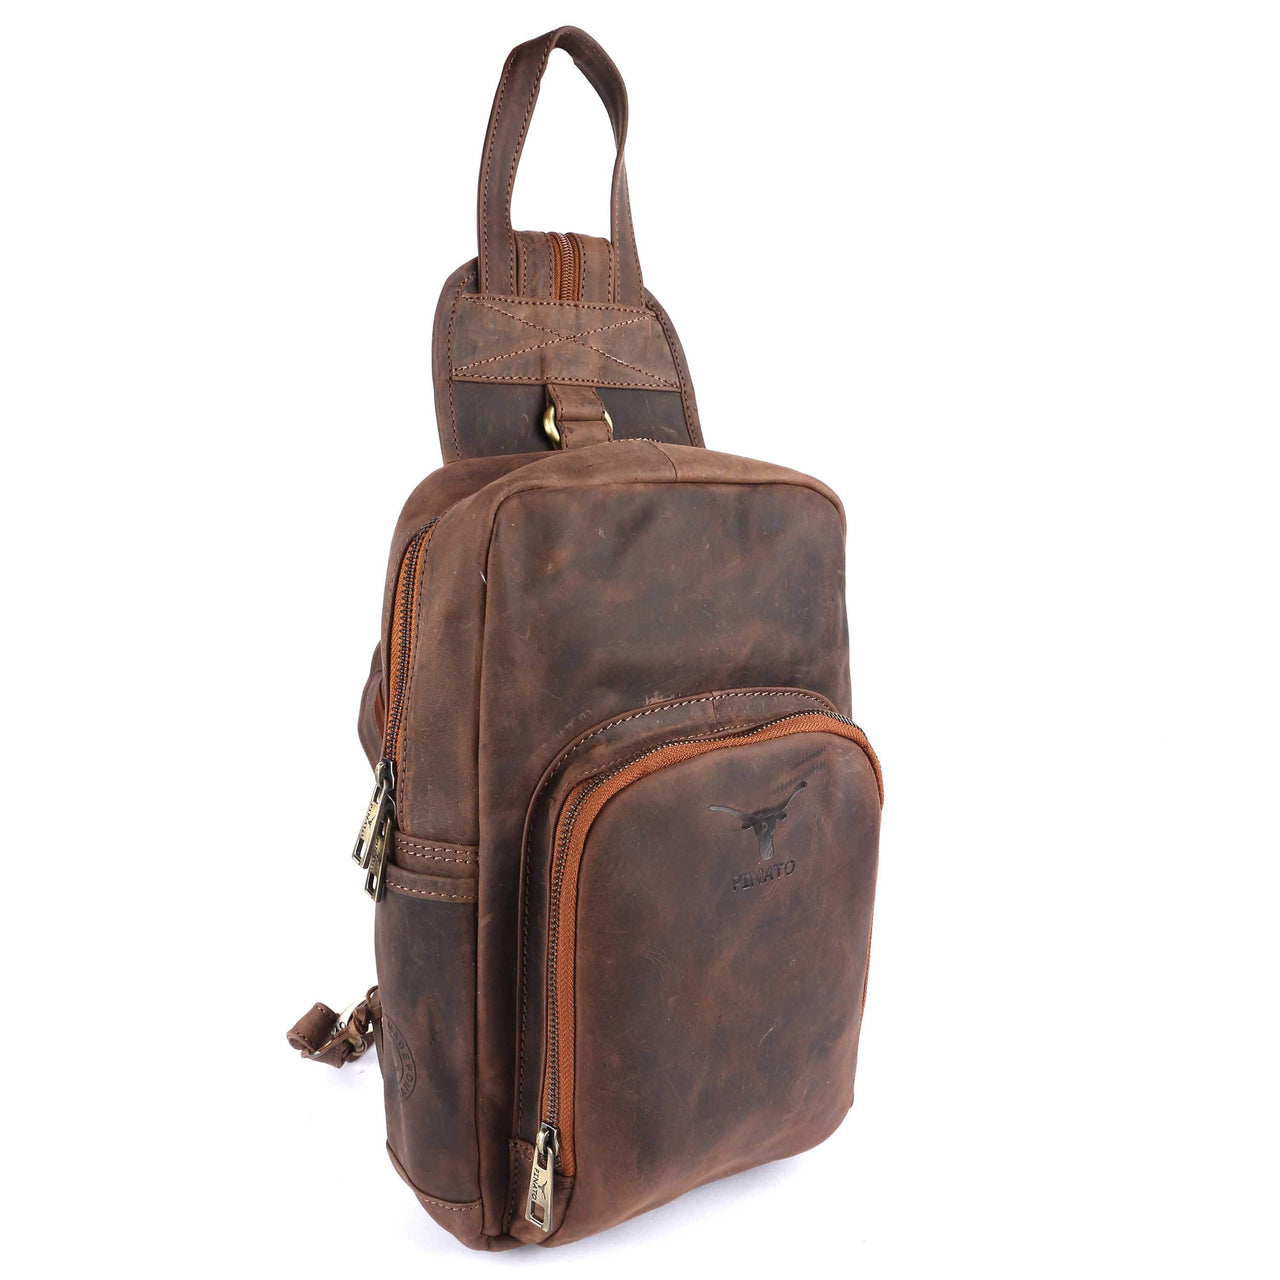 Pinato Genuine Leather Cognac Backpack for Men & Women (PL-4018)